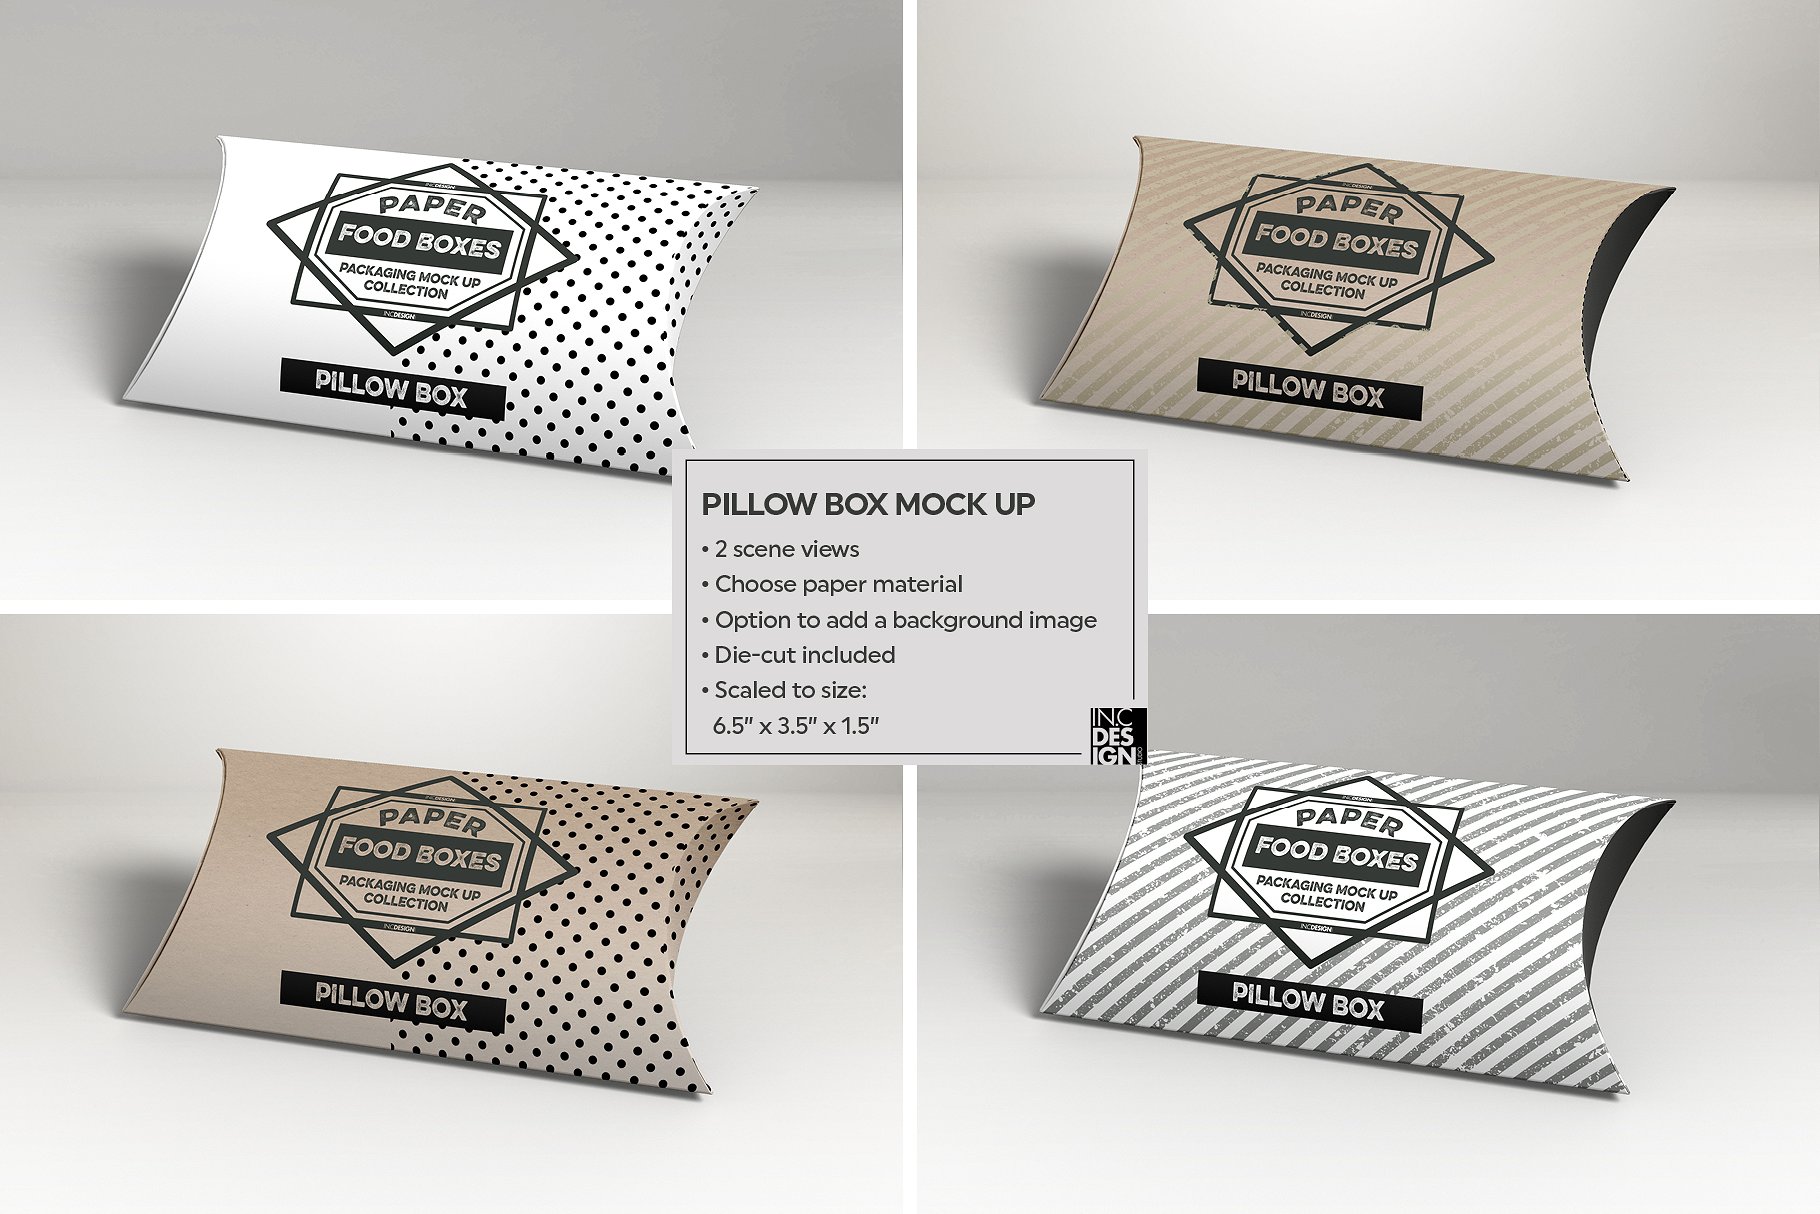 纸质食品盒包装样机1 Food Box Packaging Mockups Vol 1插图8